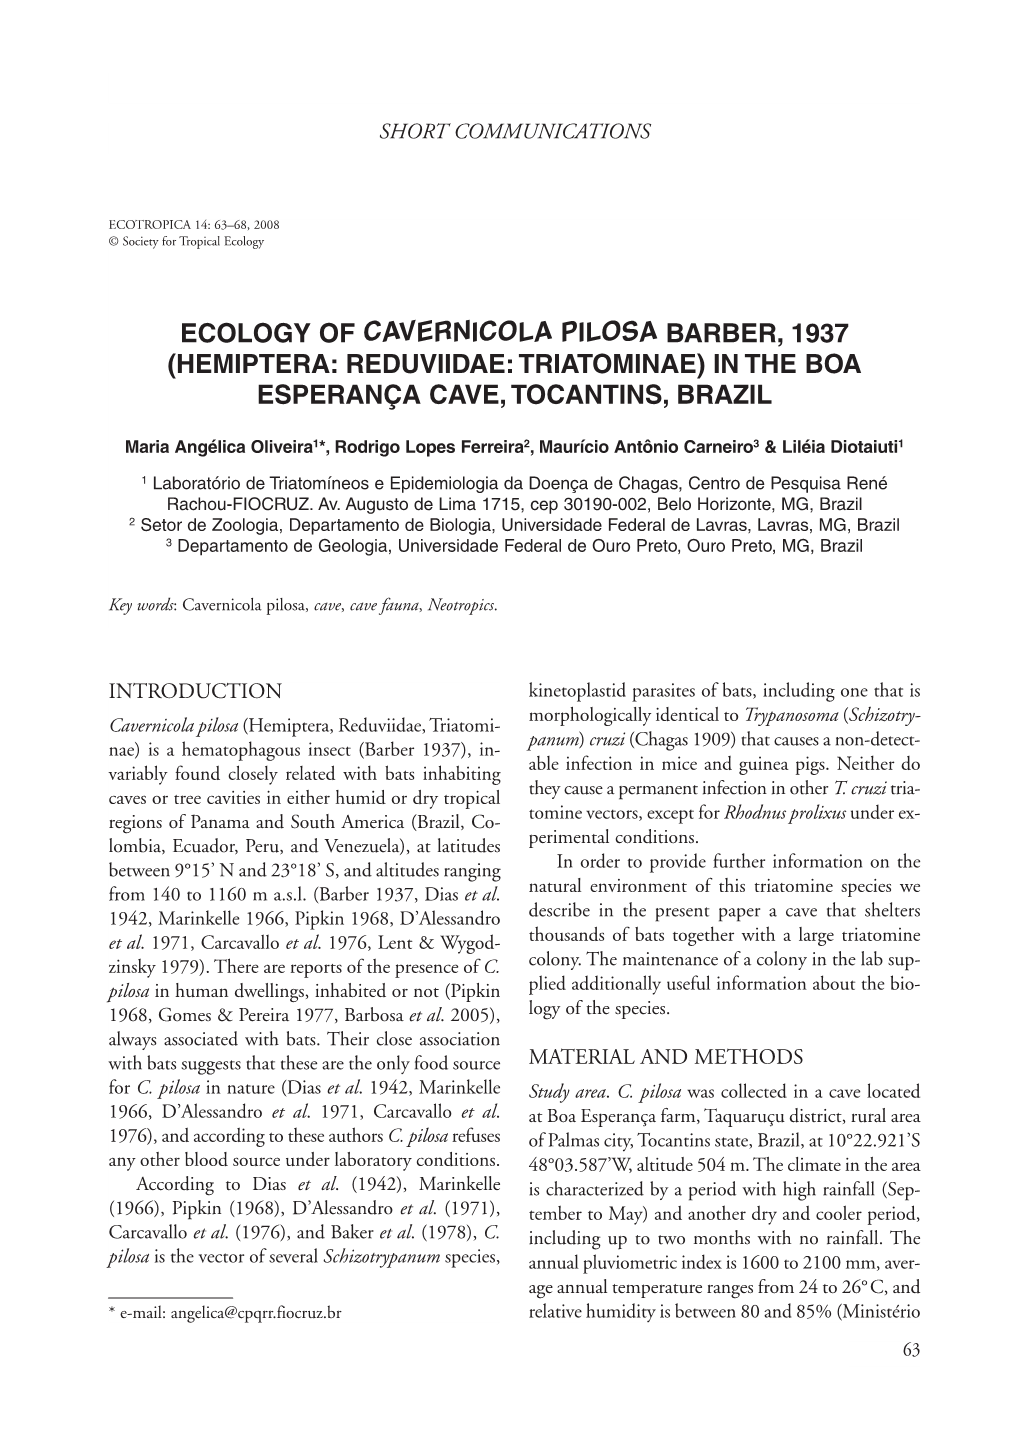 Ecology of Cavernicola Pilosa Barber, 1937 (Hemiptera: Reduviidae: Triatominae) in the Boa Esperança Cave, Tocantins, Brazil